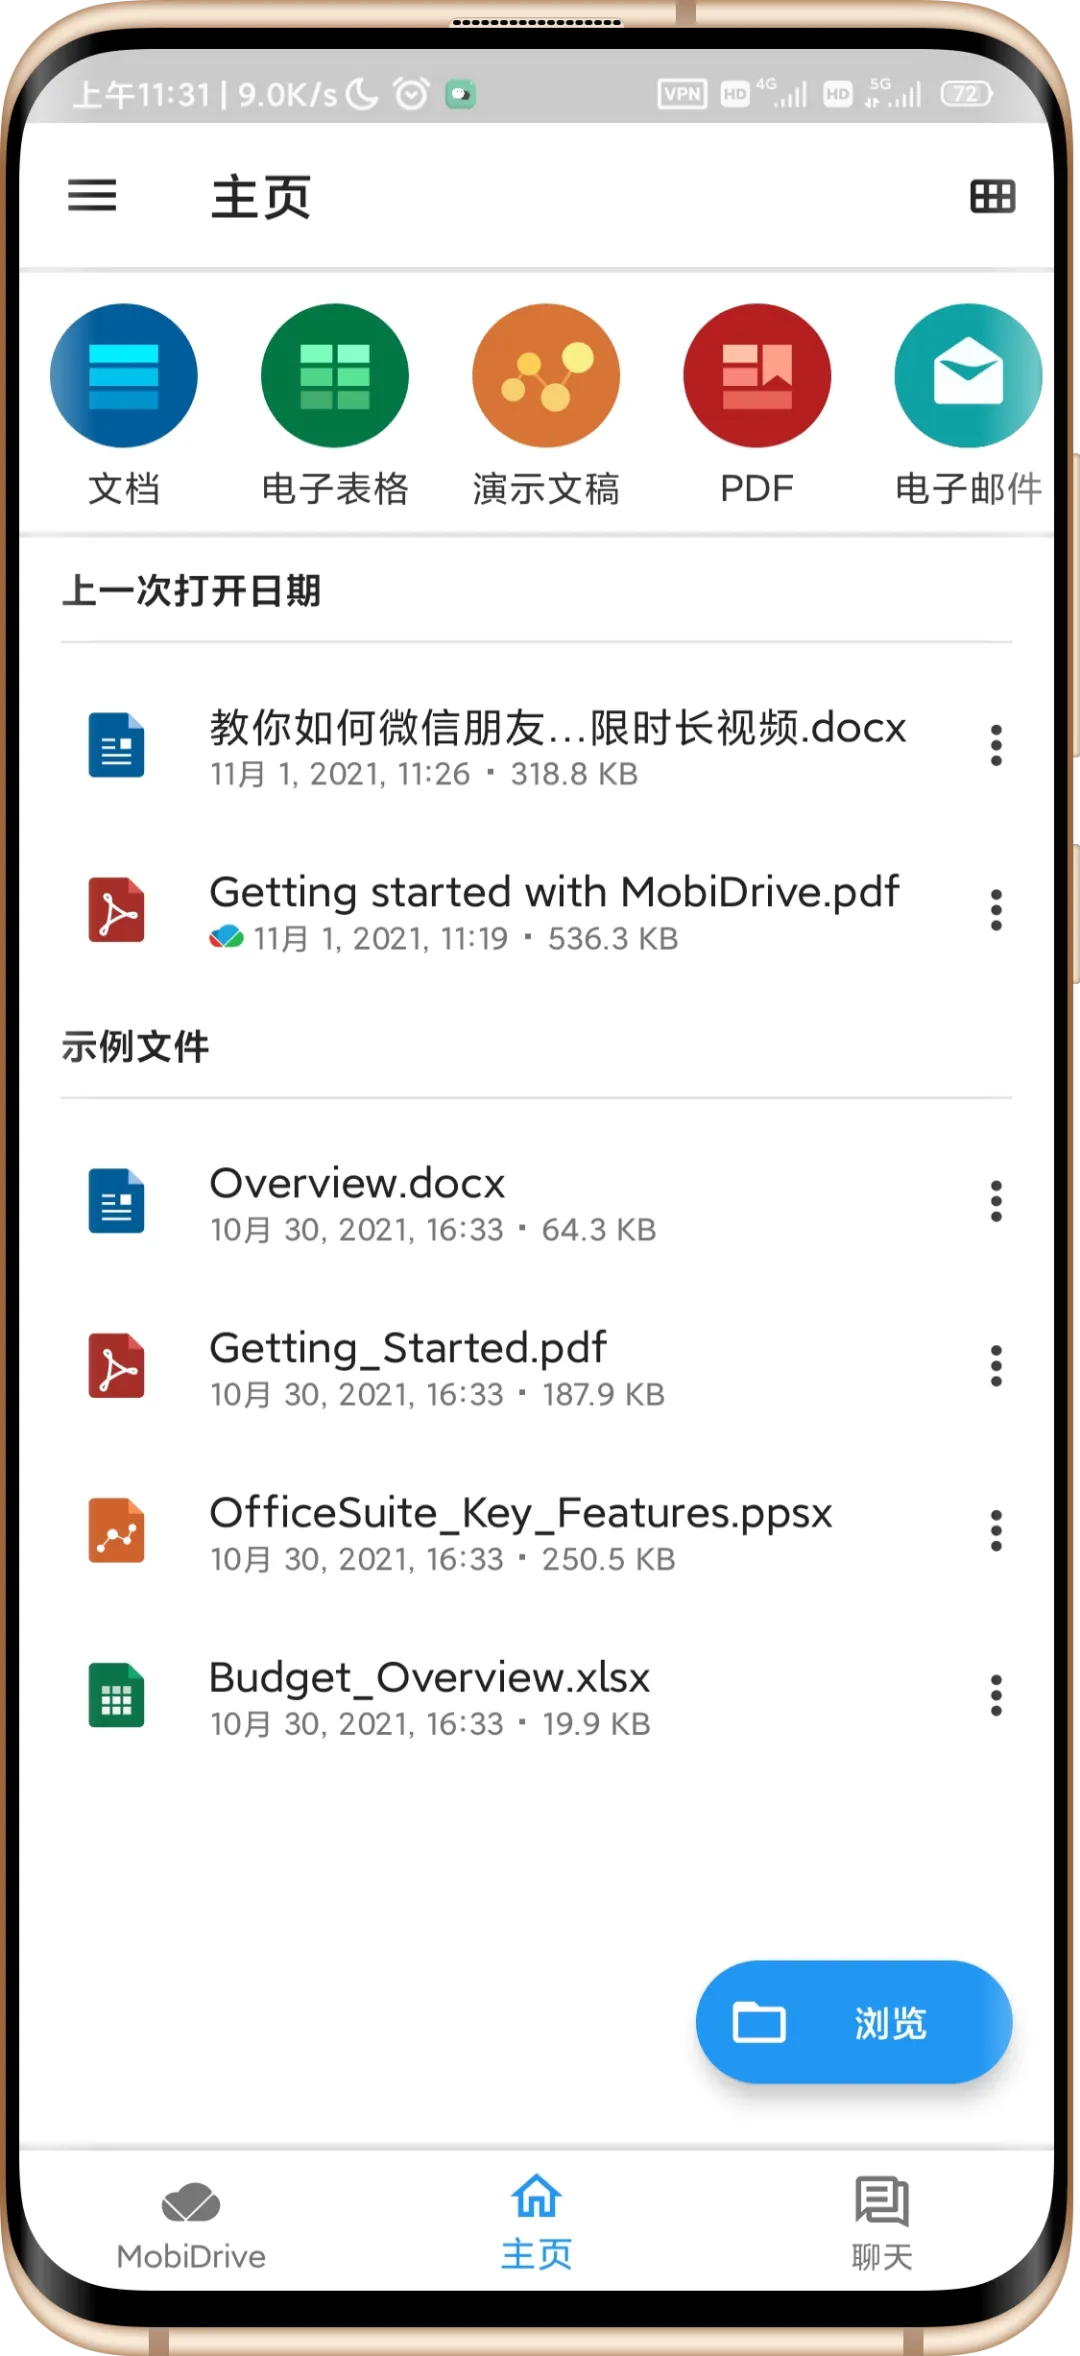 OfficeSuite（安卓）一款世界顶级的移动办公软件，功能非常强大